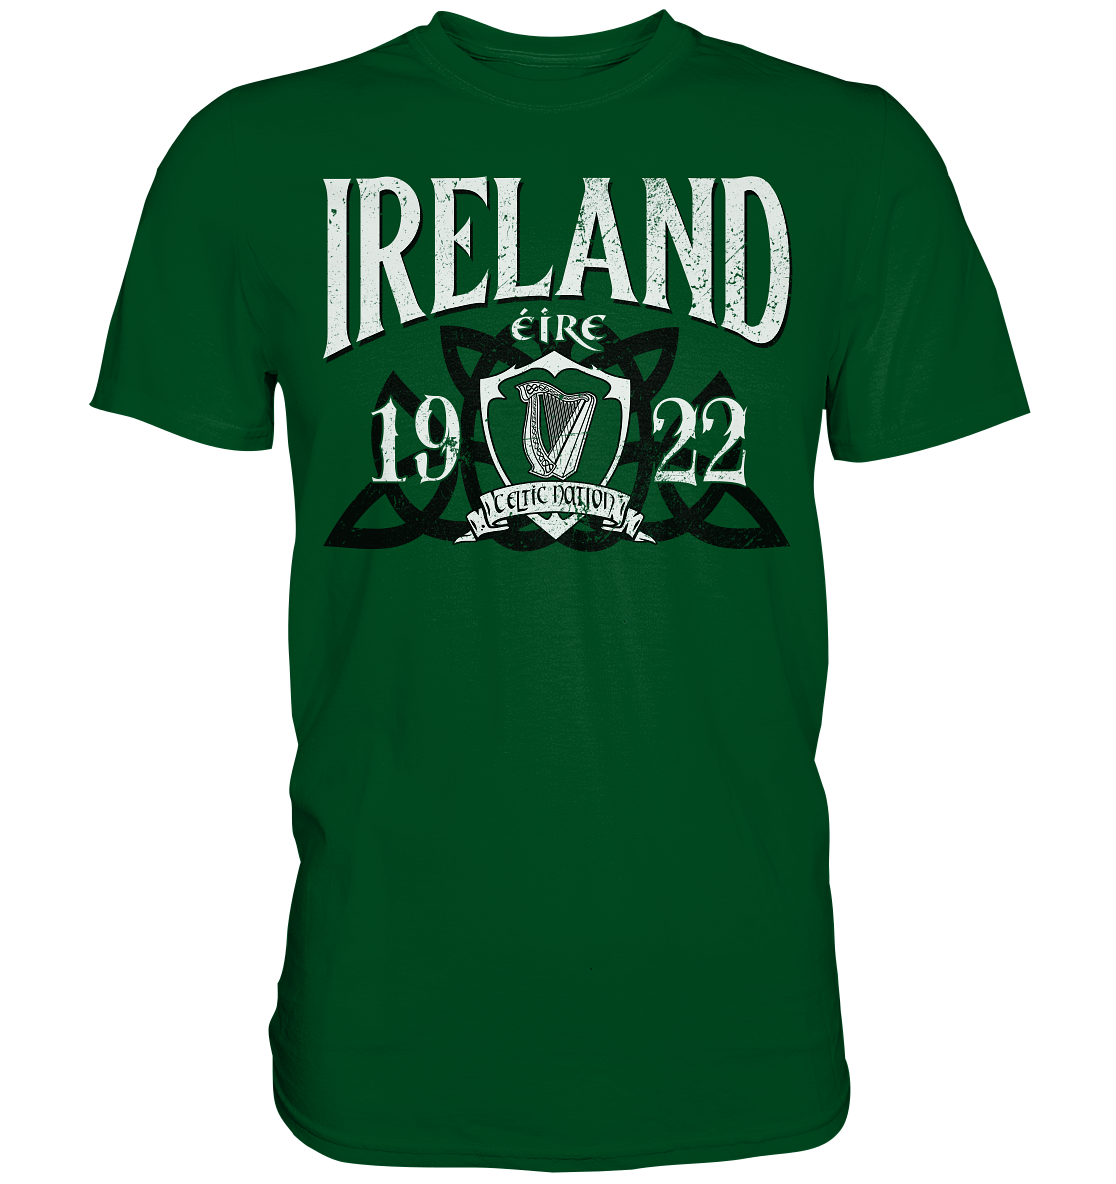 Ireland "Éire 1922" - Premium Shirt